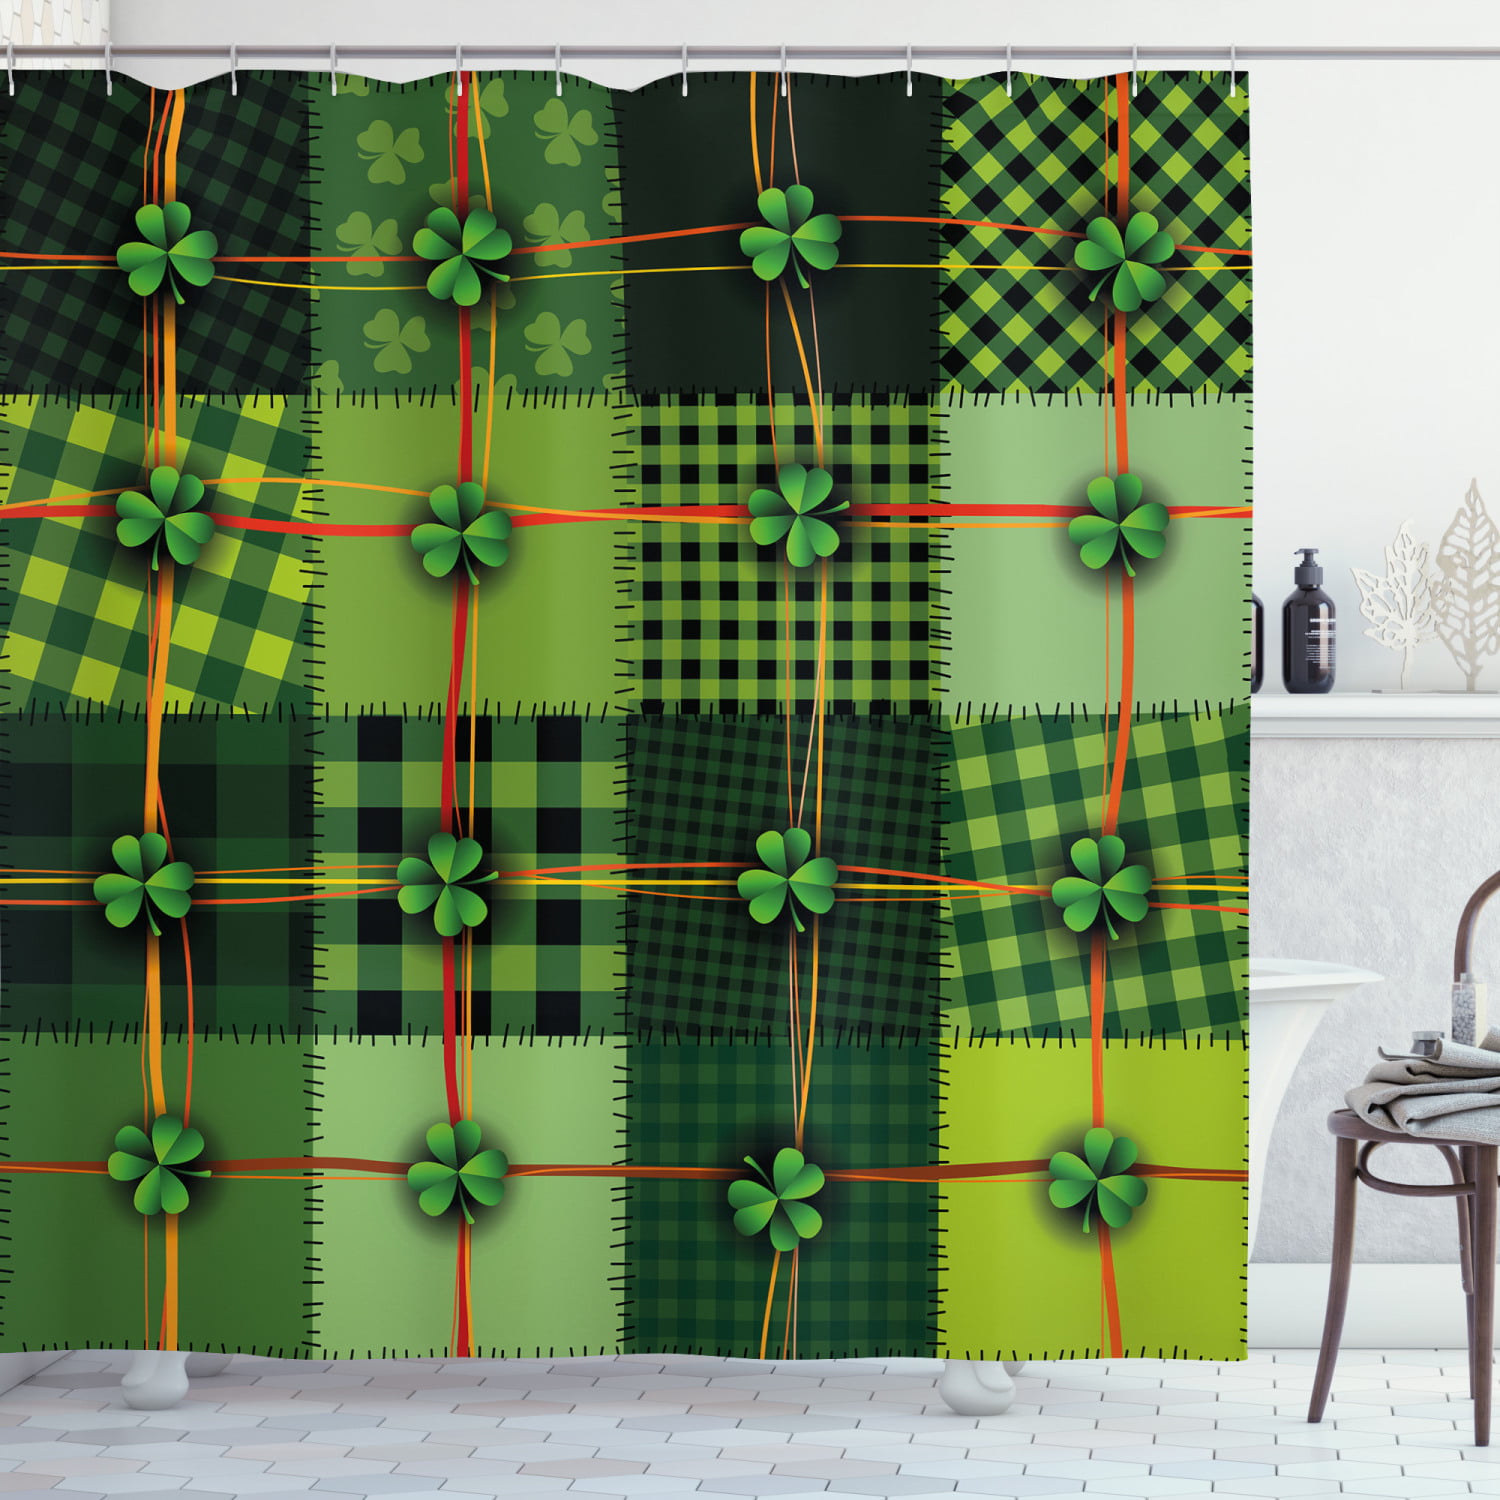 Waterproof Fabric Shower Curtain Bath Mat St Patrick's Day Green Clover Theme 